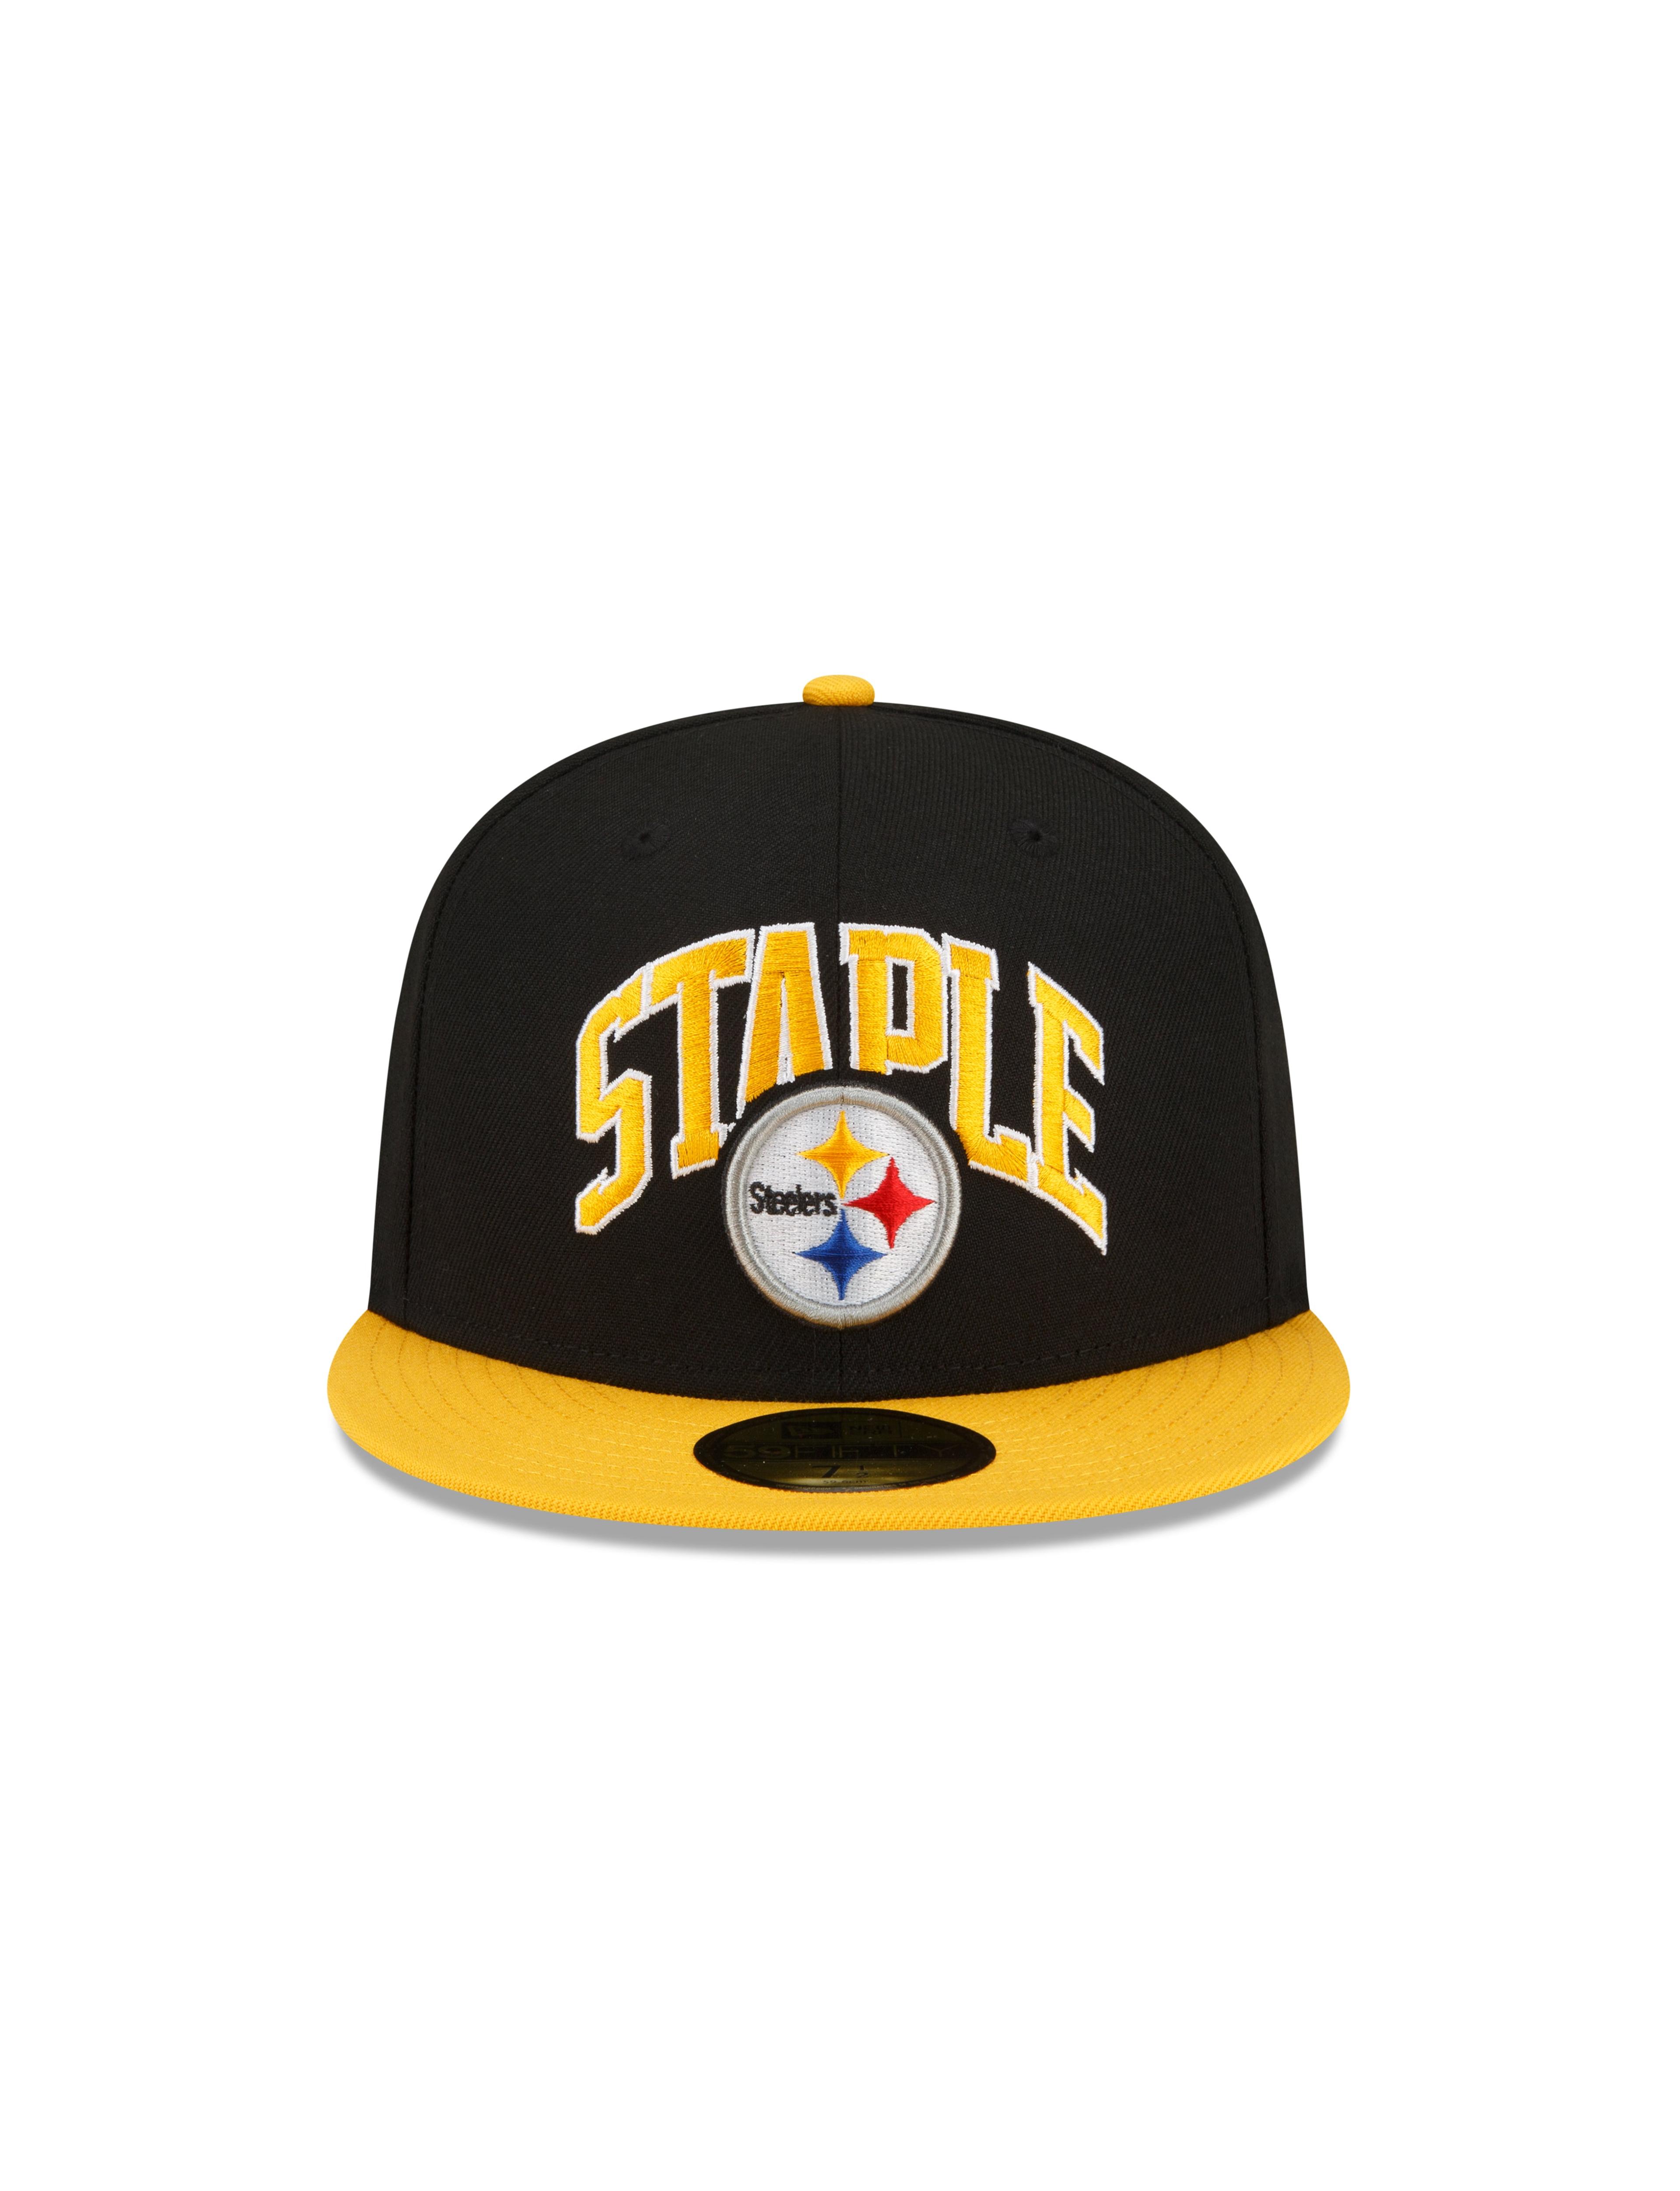 Staple x NFL x New Era 59FIFTY Cap Pittsburgh Steelers